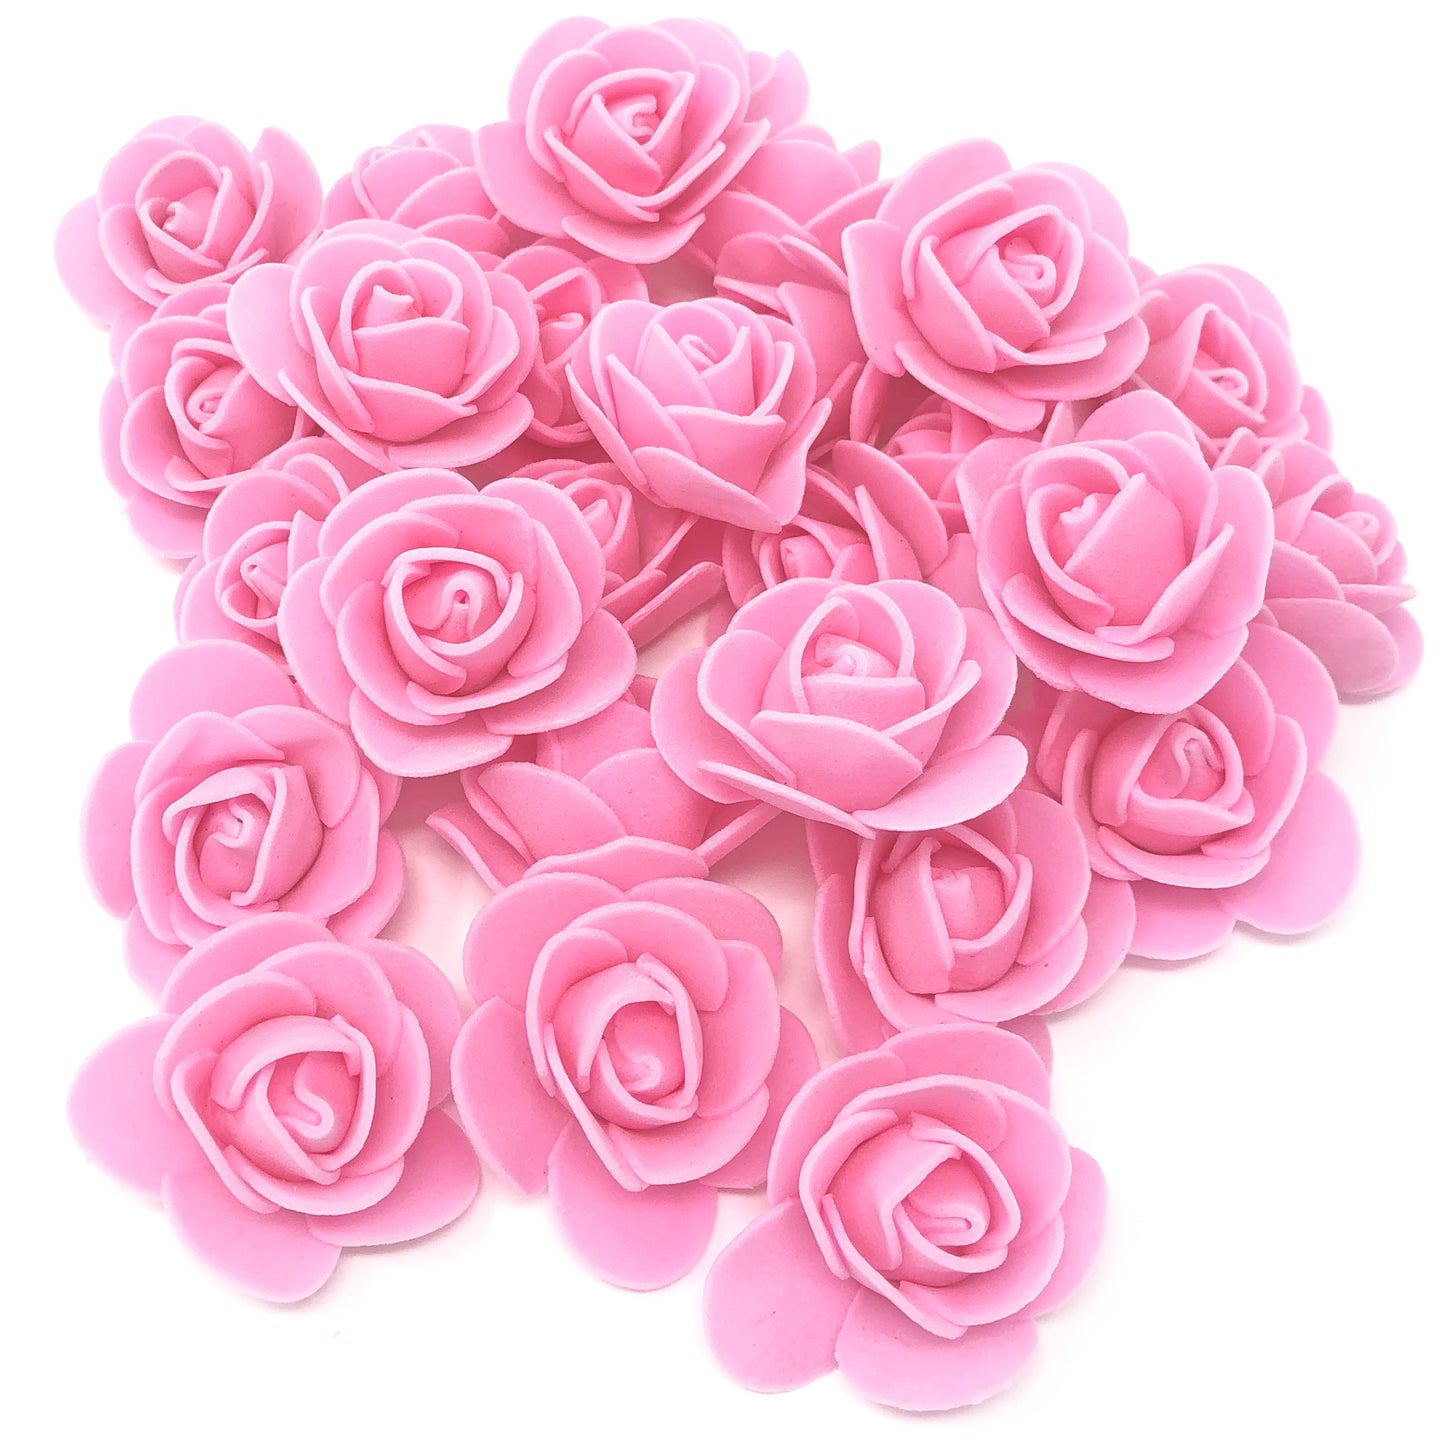 Light Pink 30mm Foam Rose Flowers